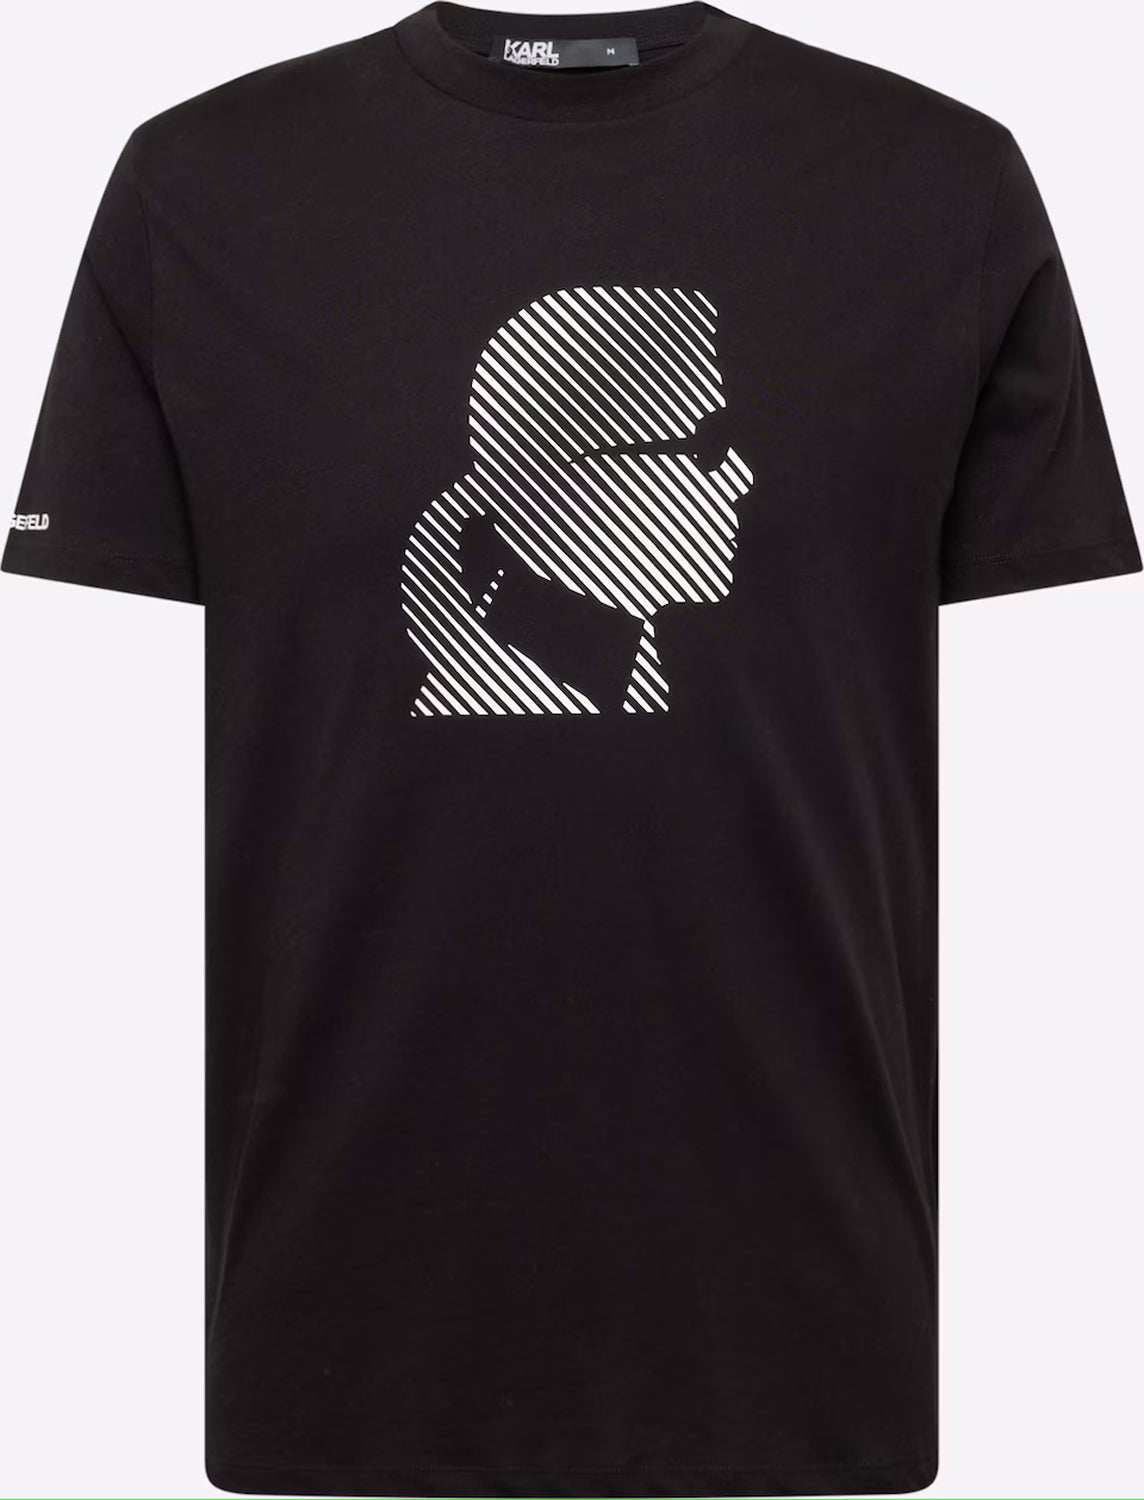 Karl Lagerfeld T Shirt Kl755052 Black Preto_shot4